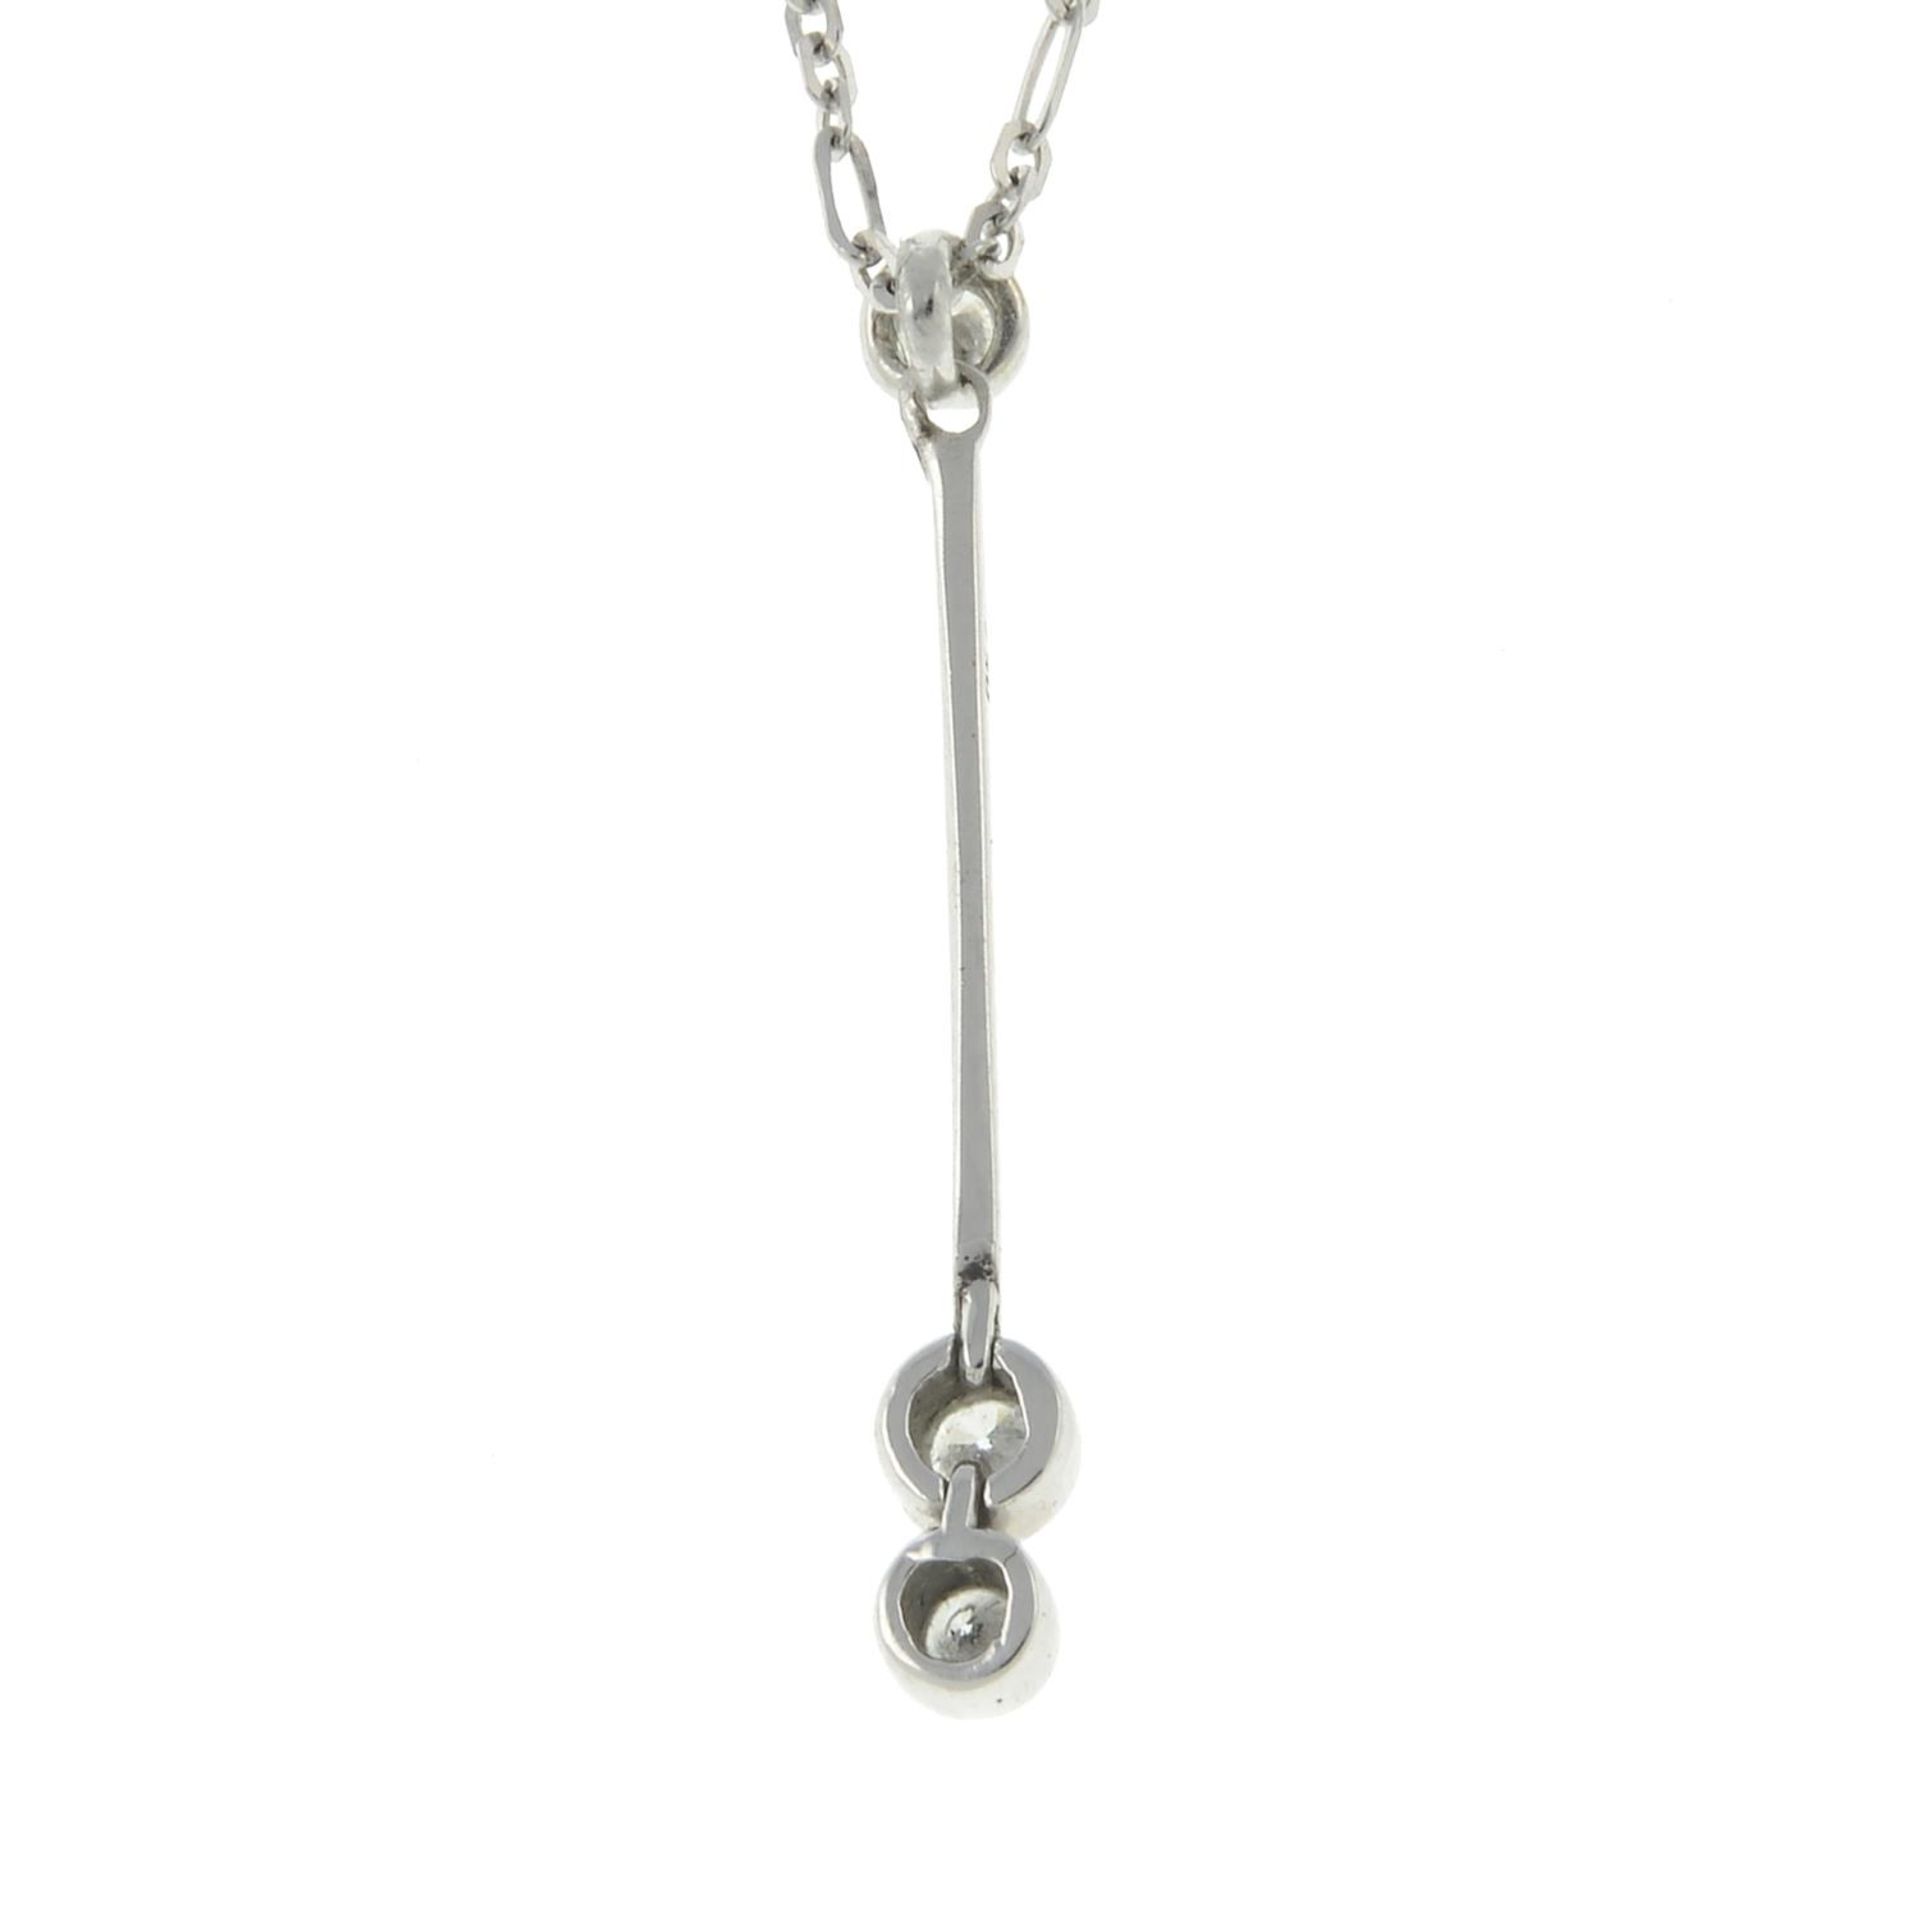 A brilliant-cut diamond pendant, on an integral chain. - Image 2 of 2